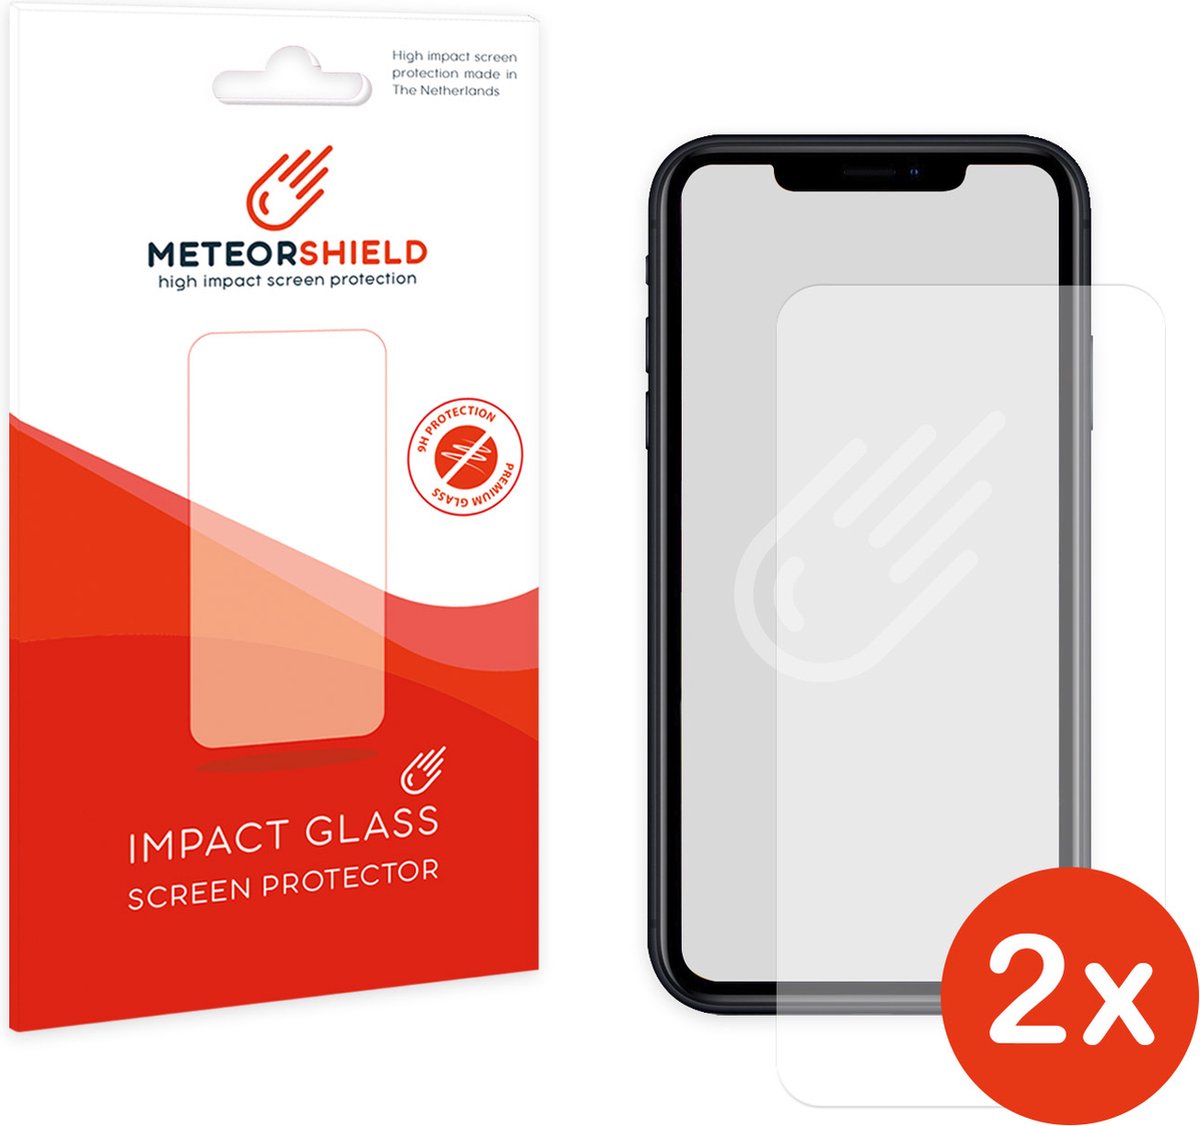 2 stuks: Meteorshield iPhone 11 screenprotector - Ultra clear impact glass